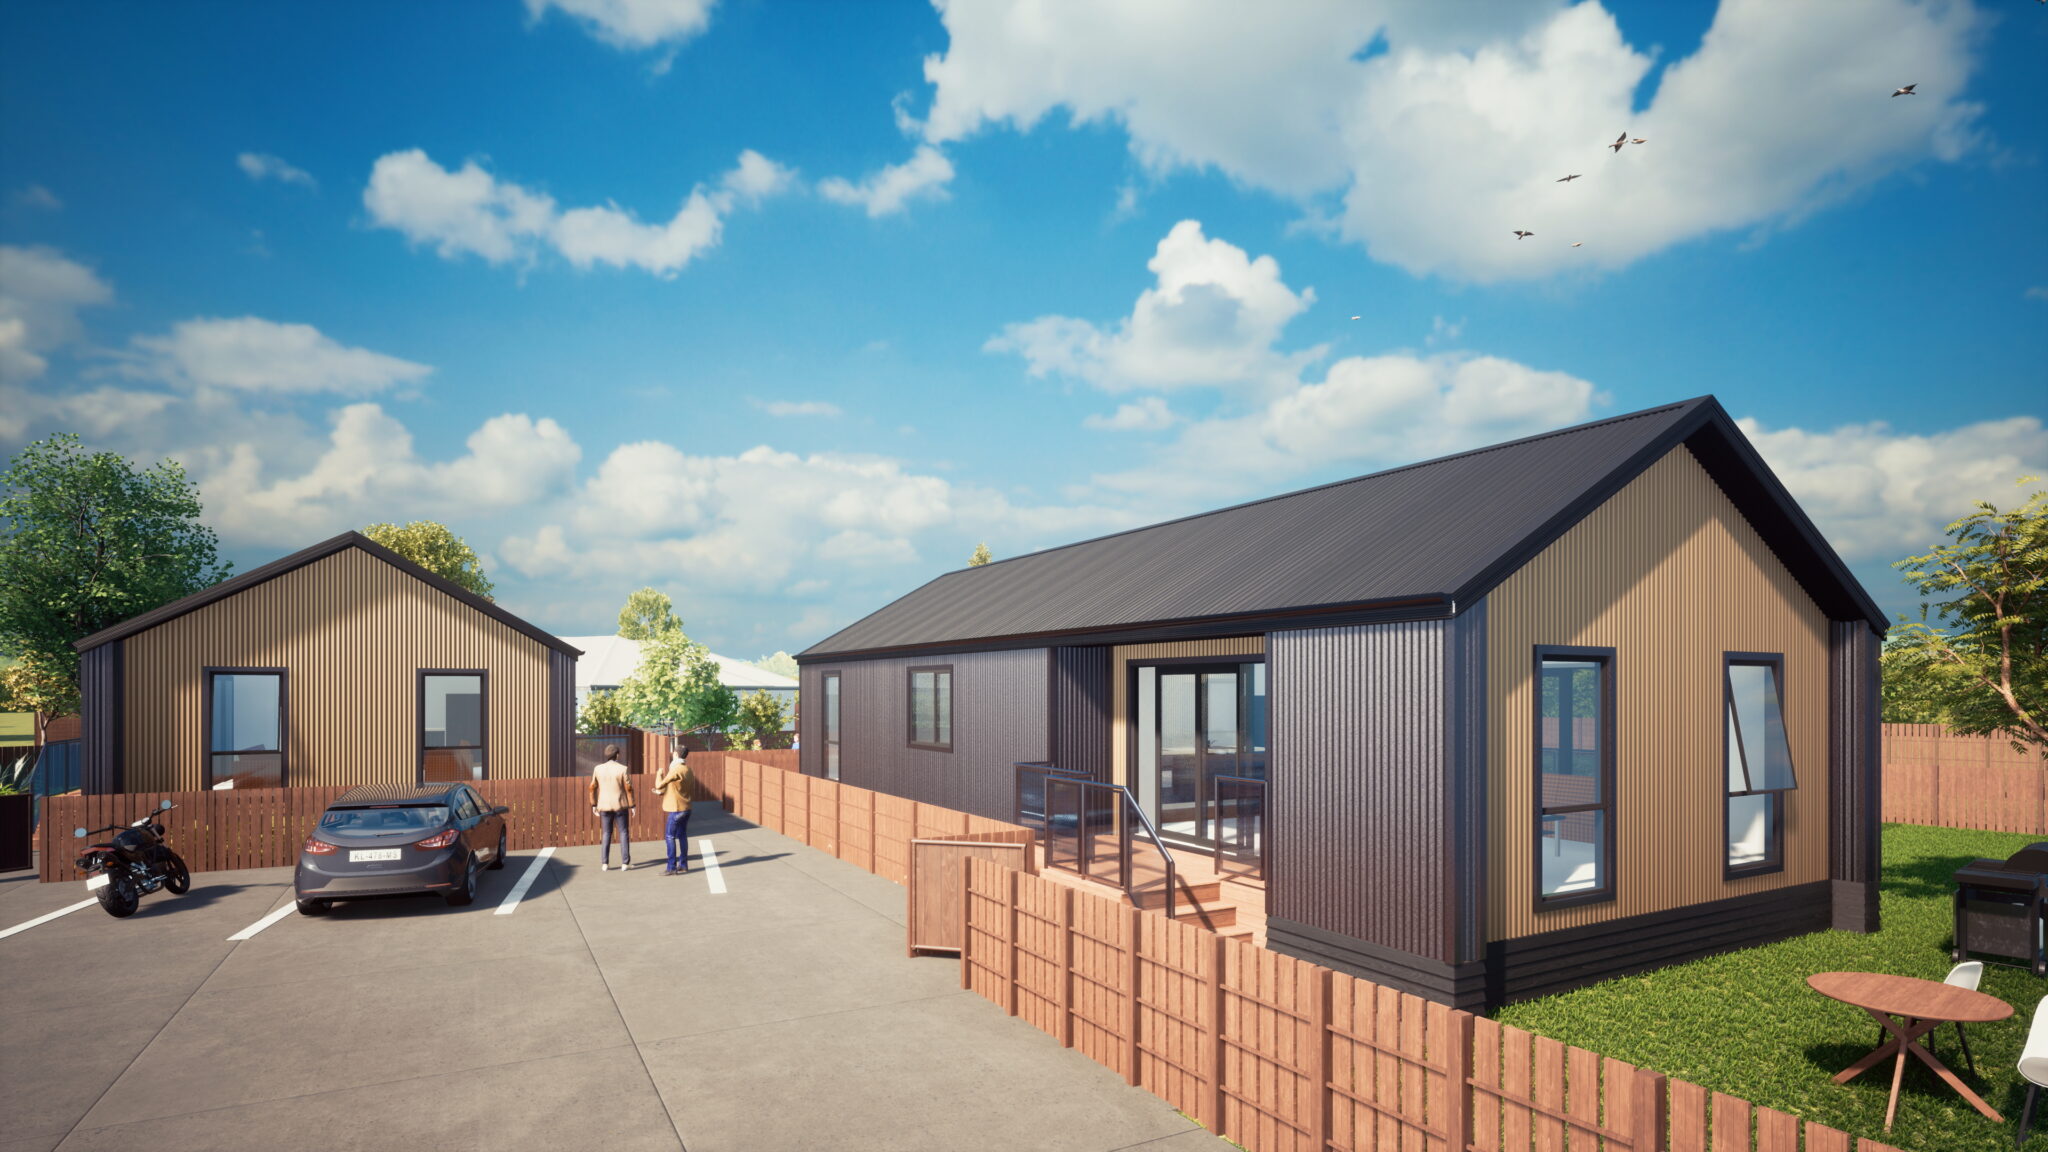 Habitat Nelson's development of 3 rent-to-buy homes in Wakefield